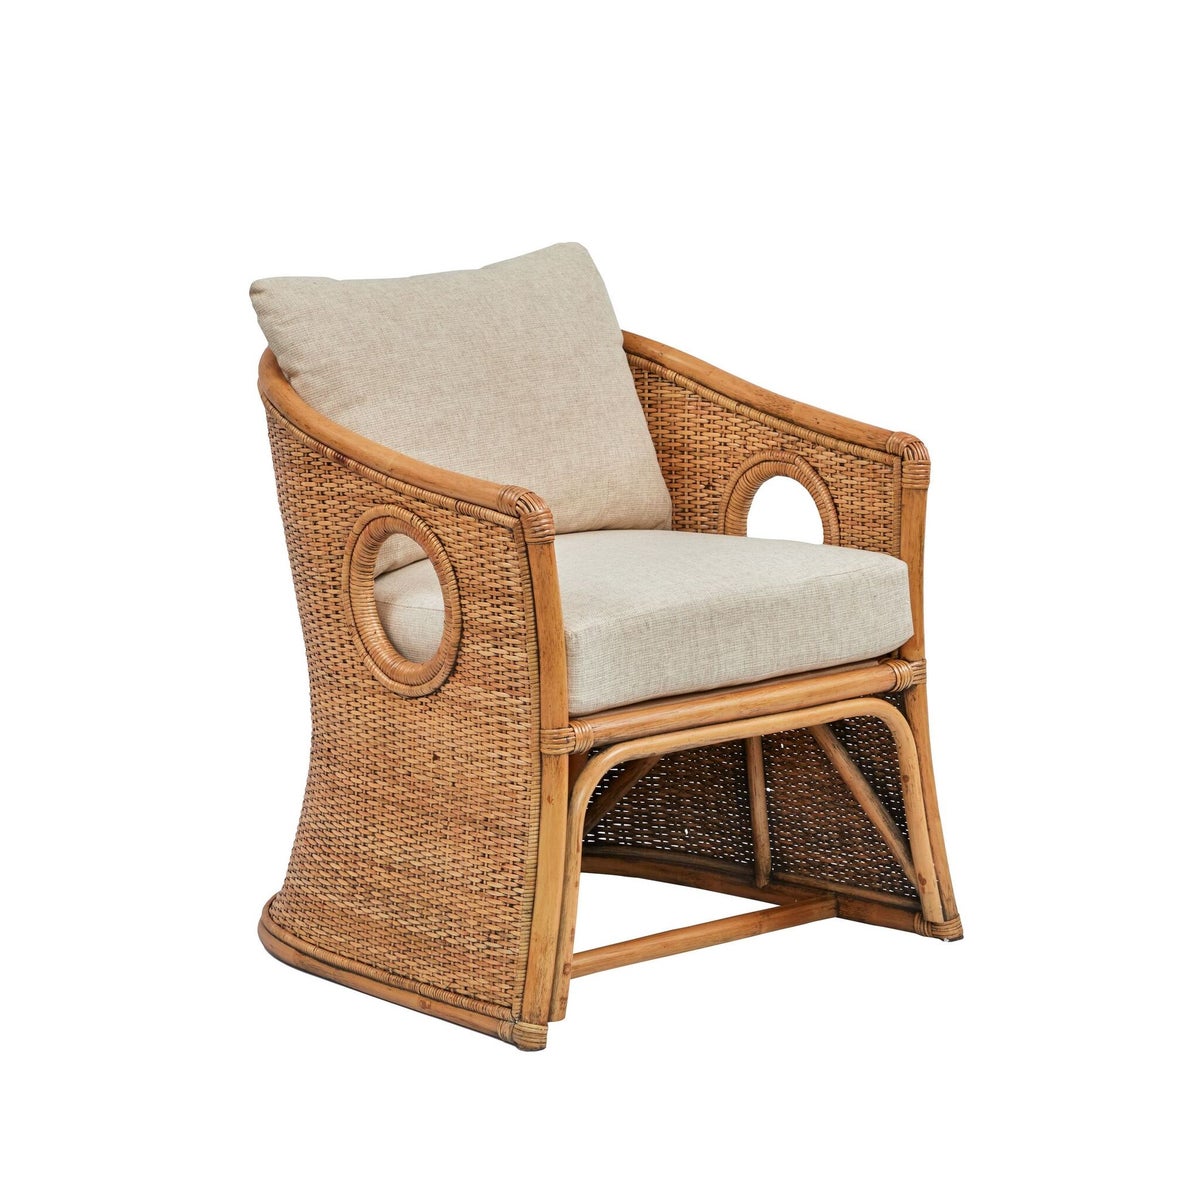 Cuddy Chair  Frame Color - Buff     Cushion Color - Cream Jarrett Bay Collection